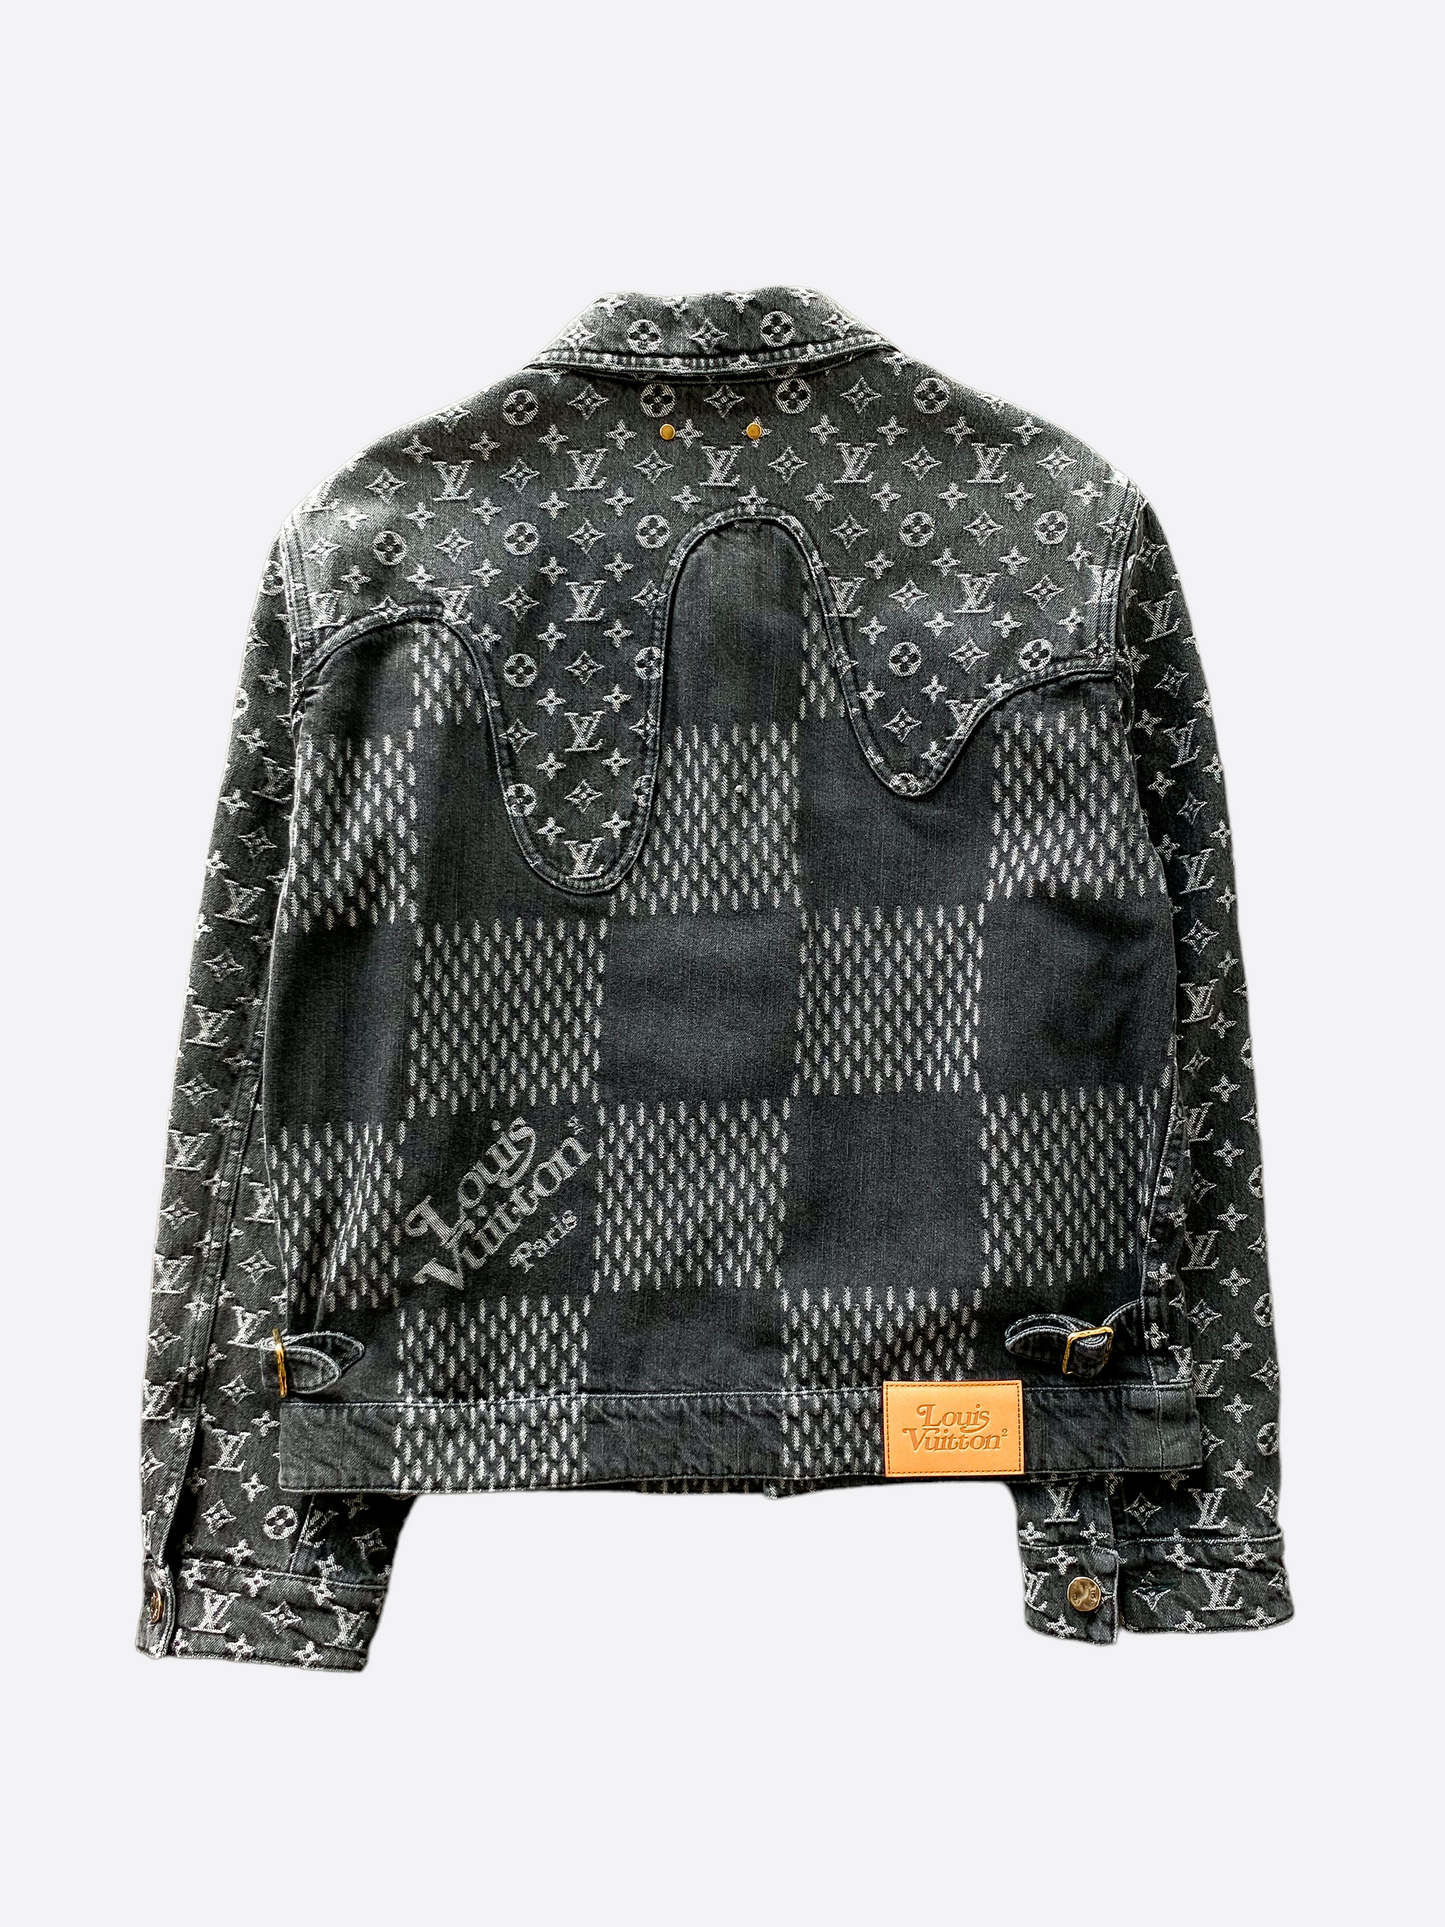 Louis Vuitton Black Denim Jacket